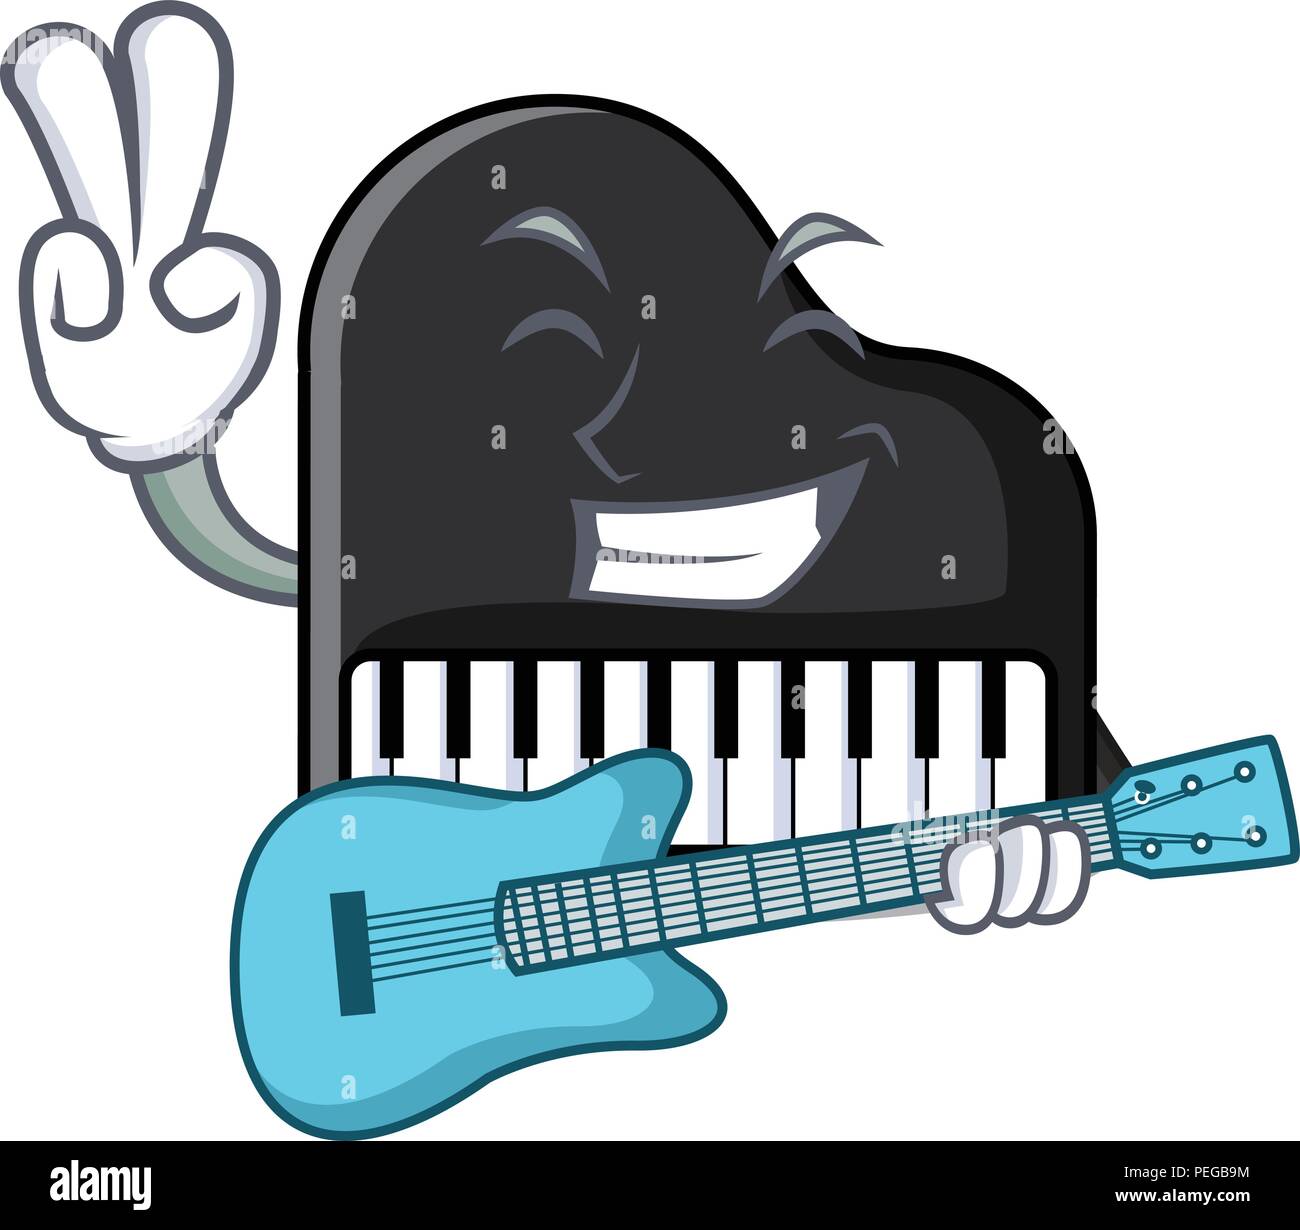 Con guitarra piano mascota estilo de dibujos animados Imagen Vector de  stock - Alamy